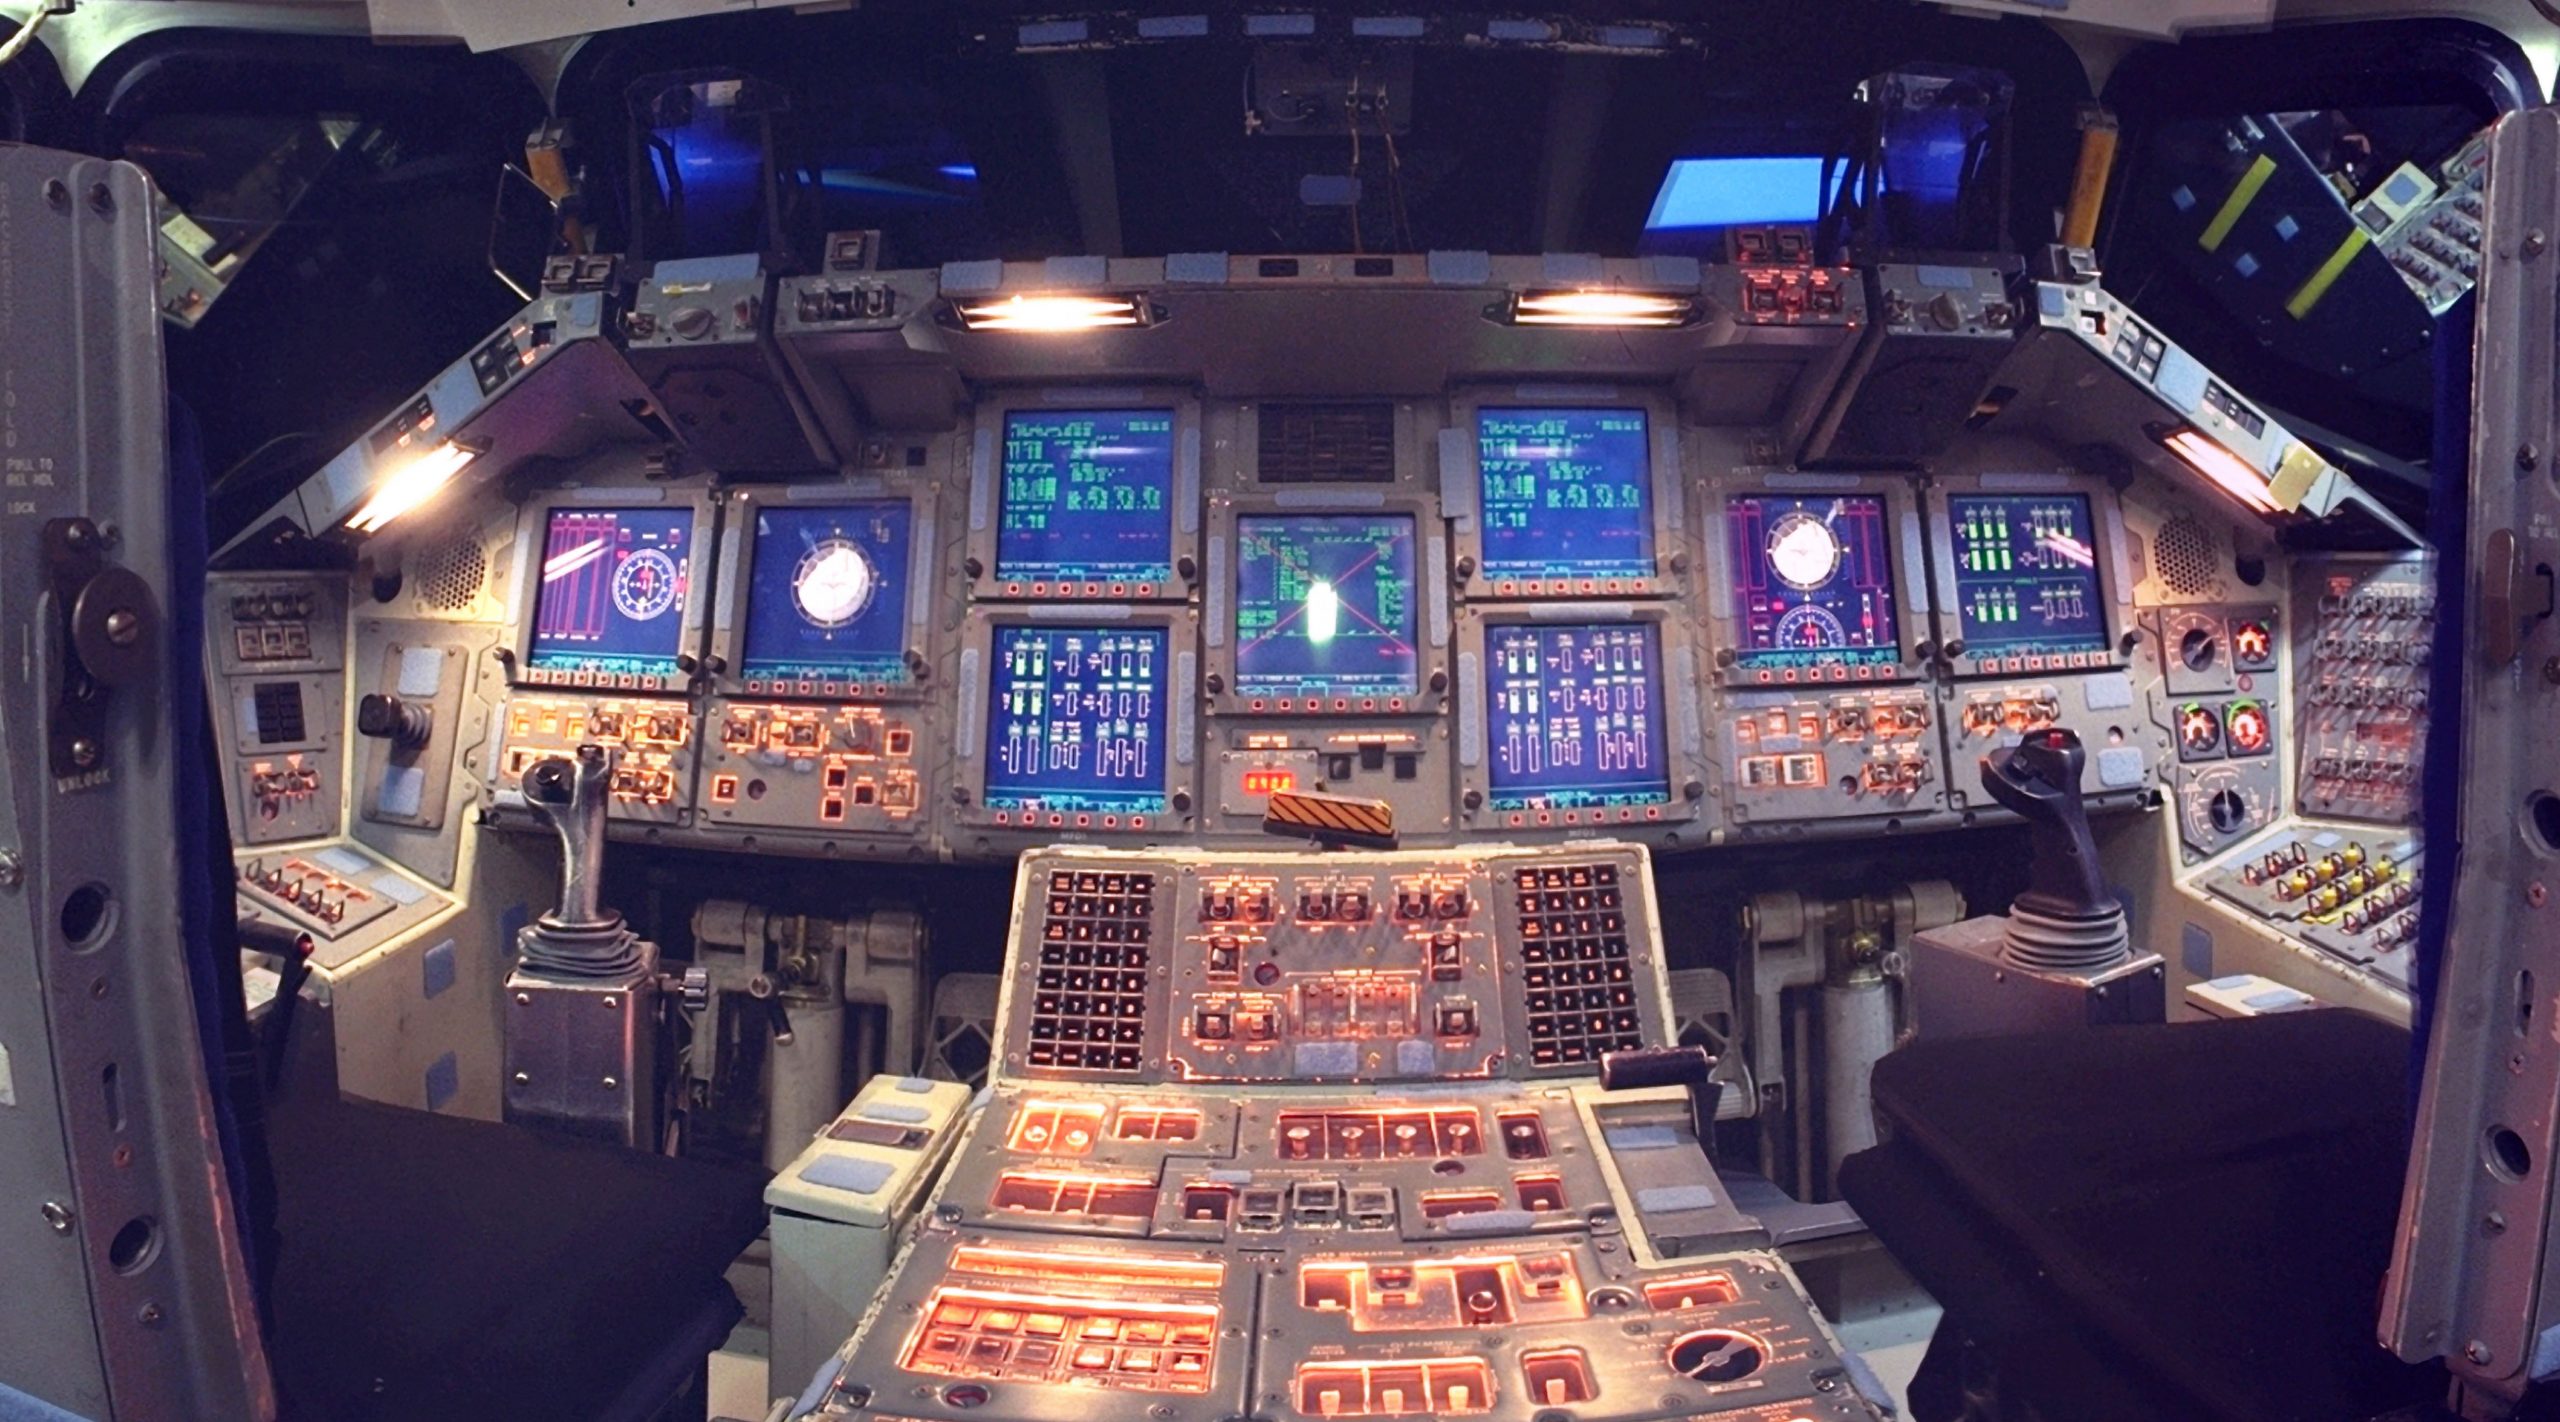 NASA Displays - Lone Star Flight Museum